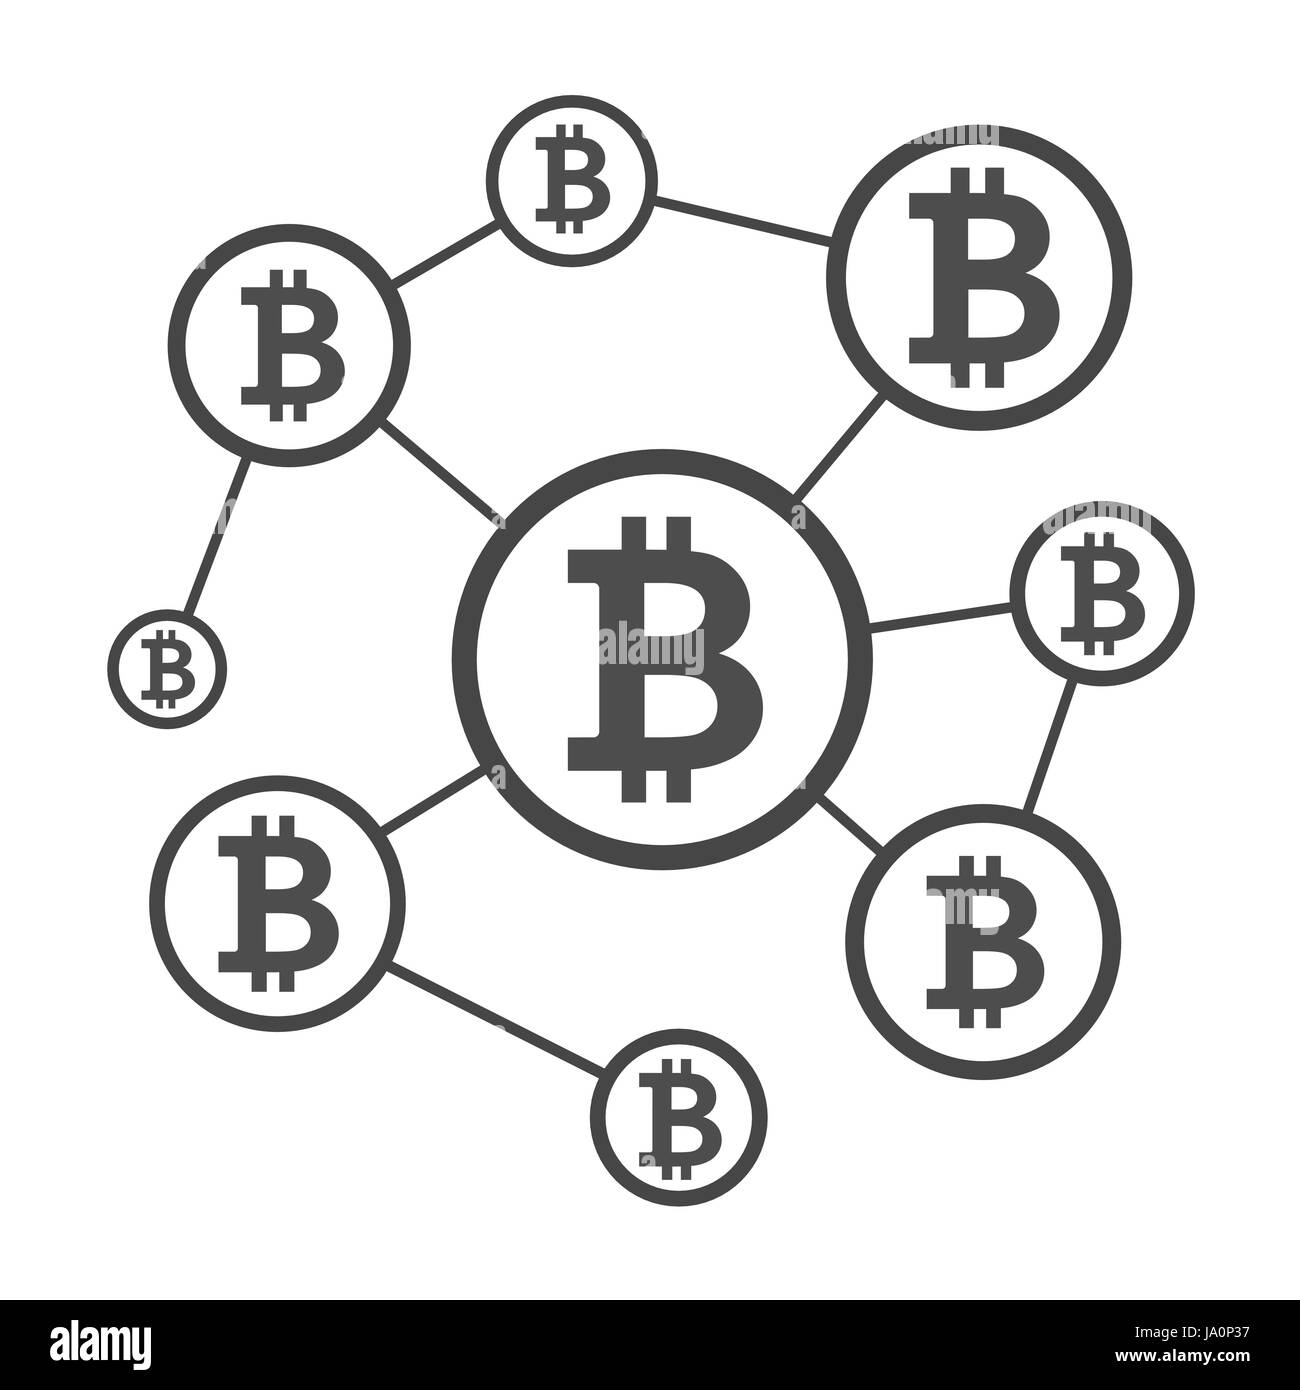 Blockchain-Netzwerk-Schemas Stock Vektor